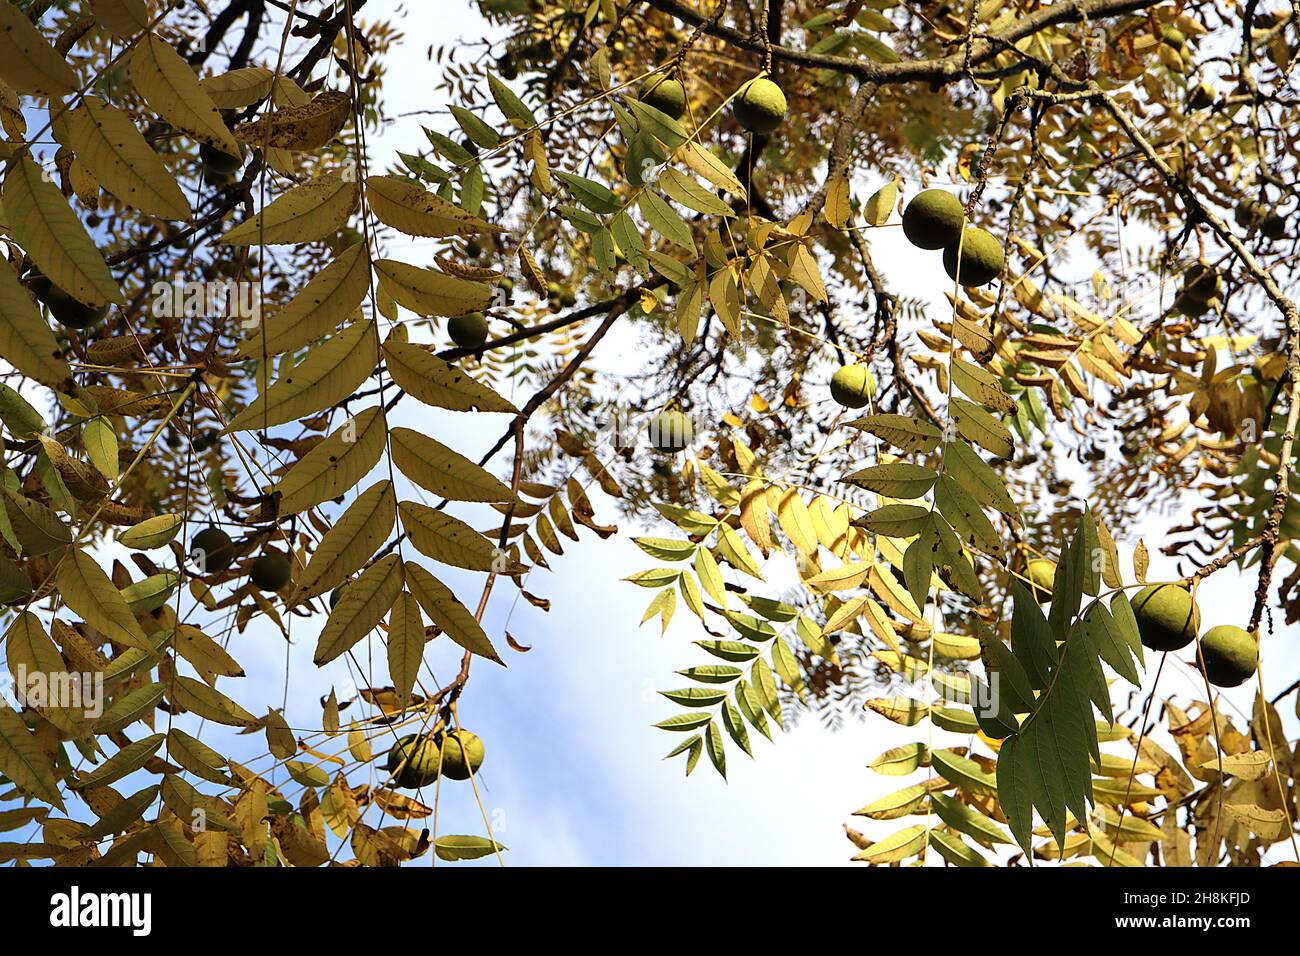 Juglans nigra black walnut tree – large round green fruit and yellow pinnate leaves,  November, England, UK Stock Photo